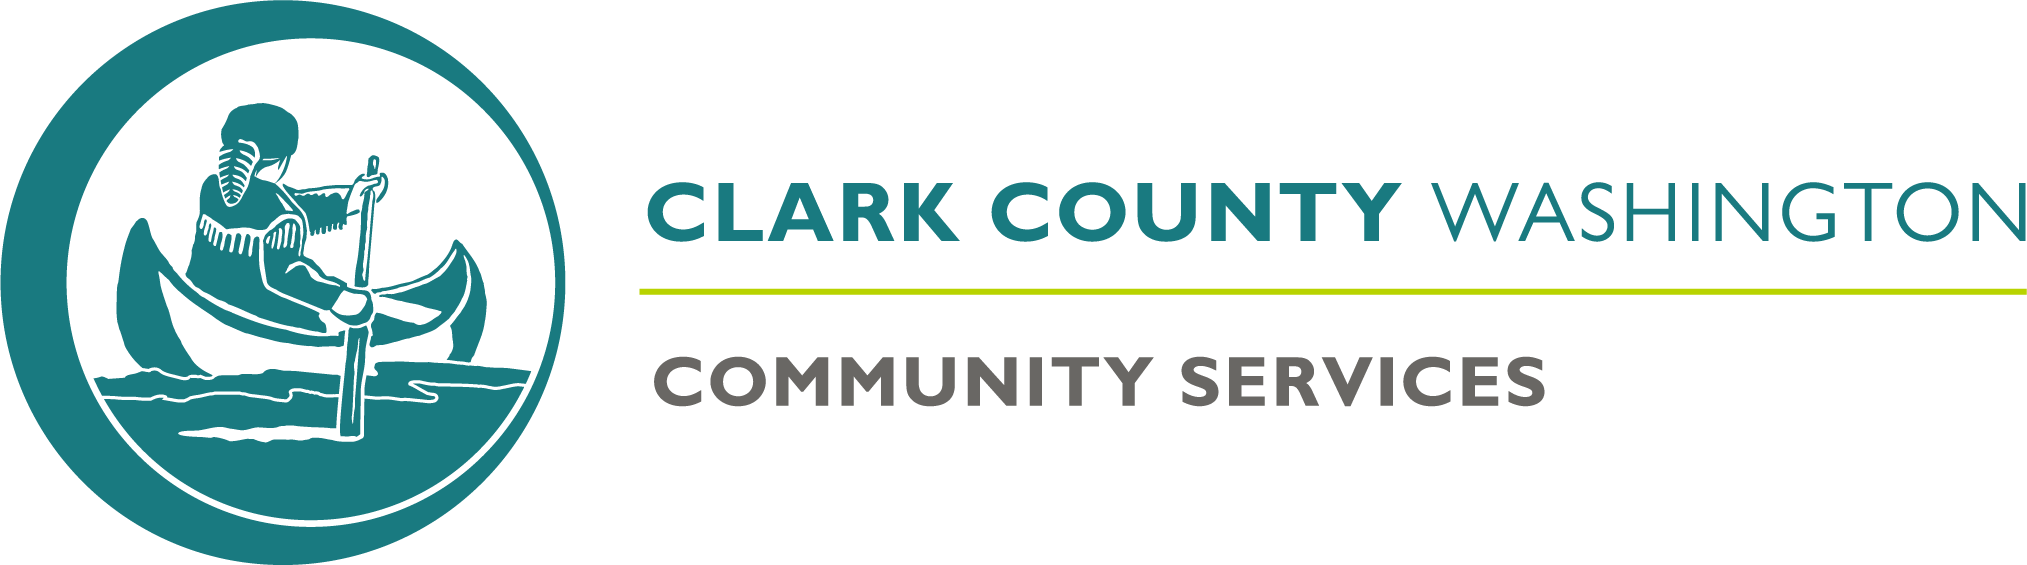 Clark County, Washington Community Services logo